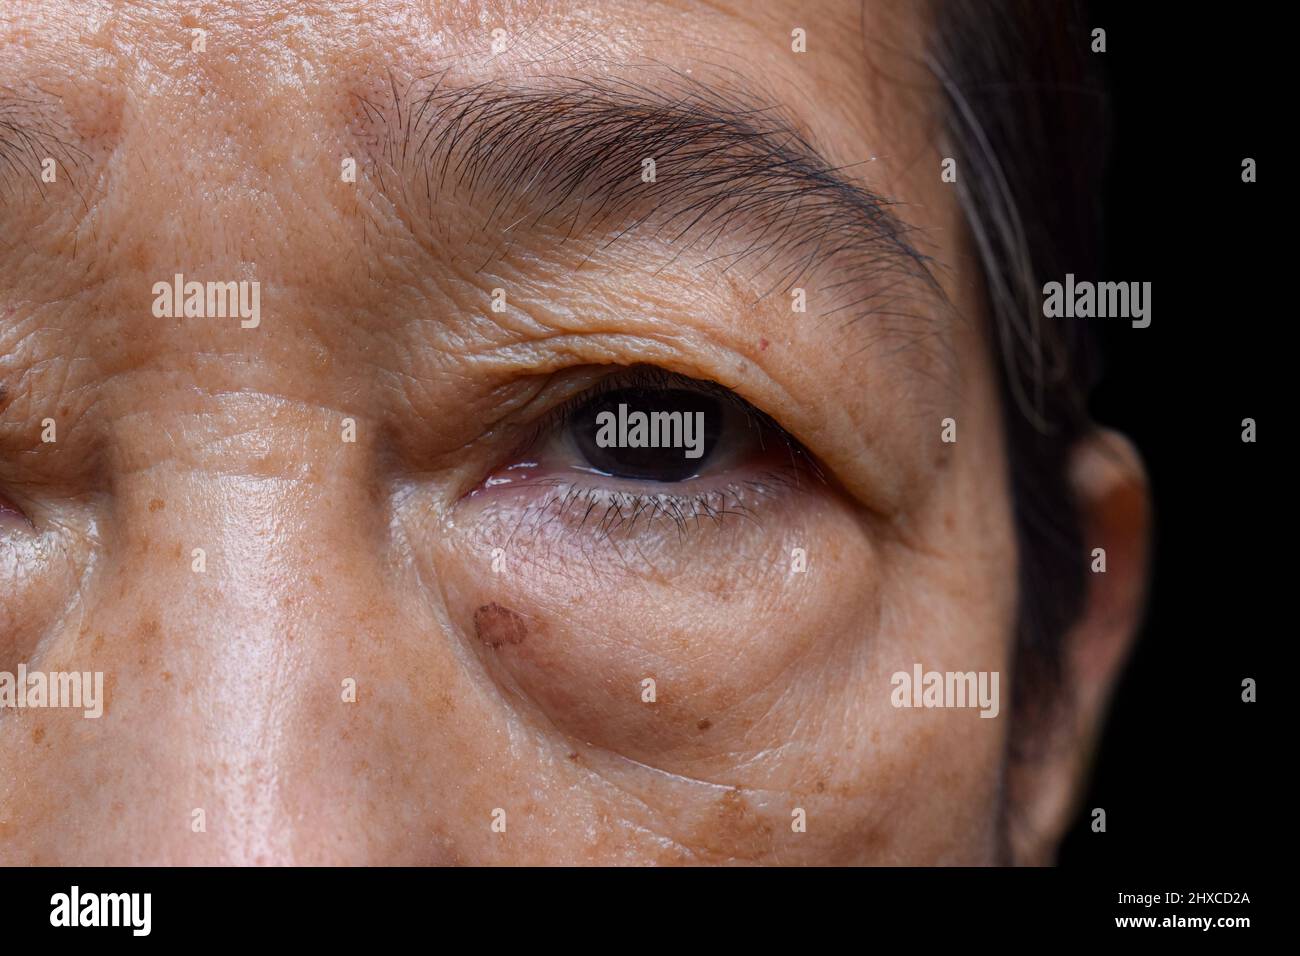 Prominent fat bag under eye of Asian elder woman. Closeup view. Stock Photo